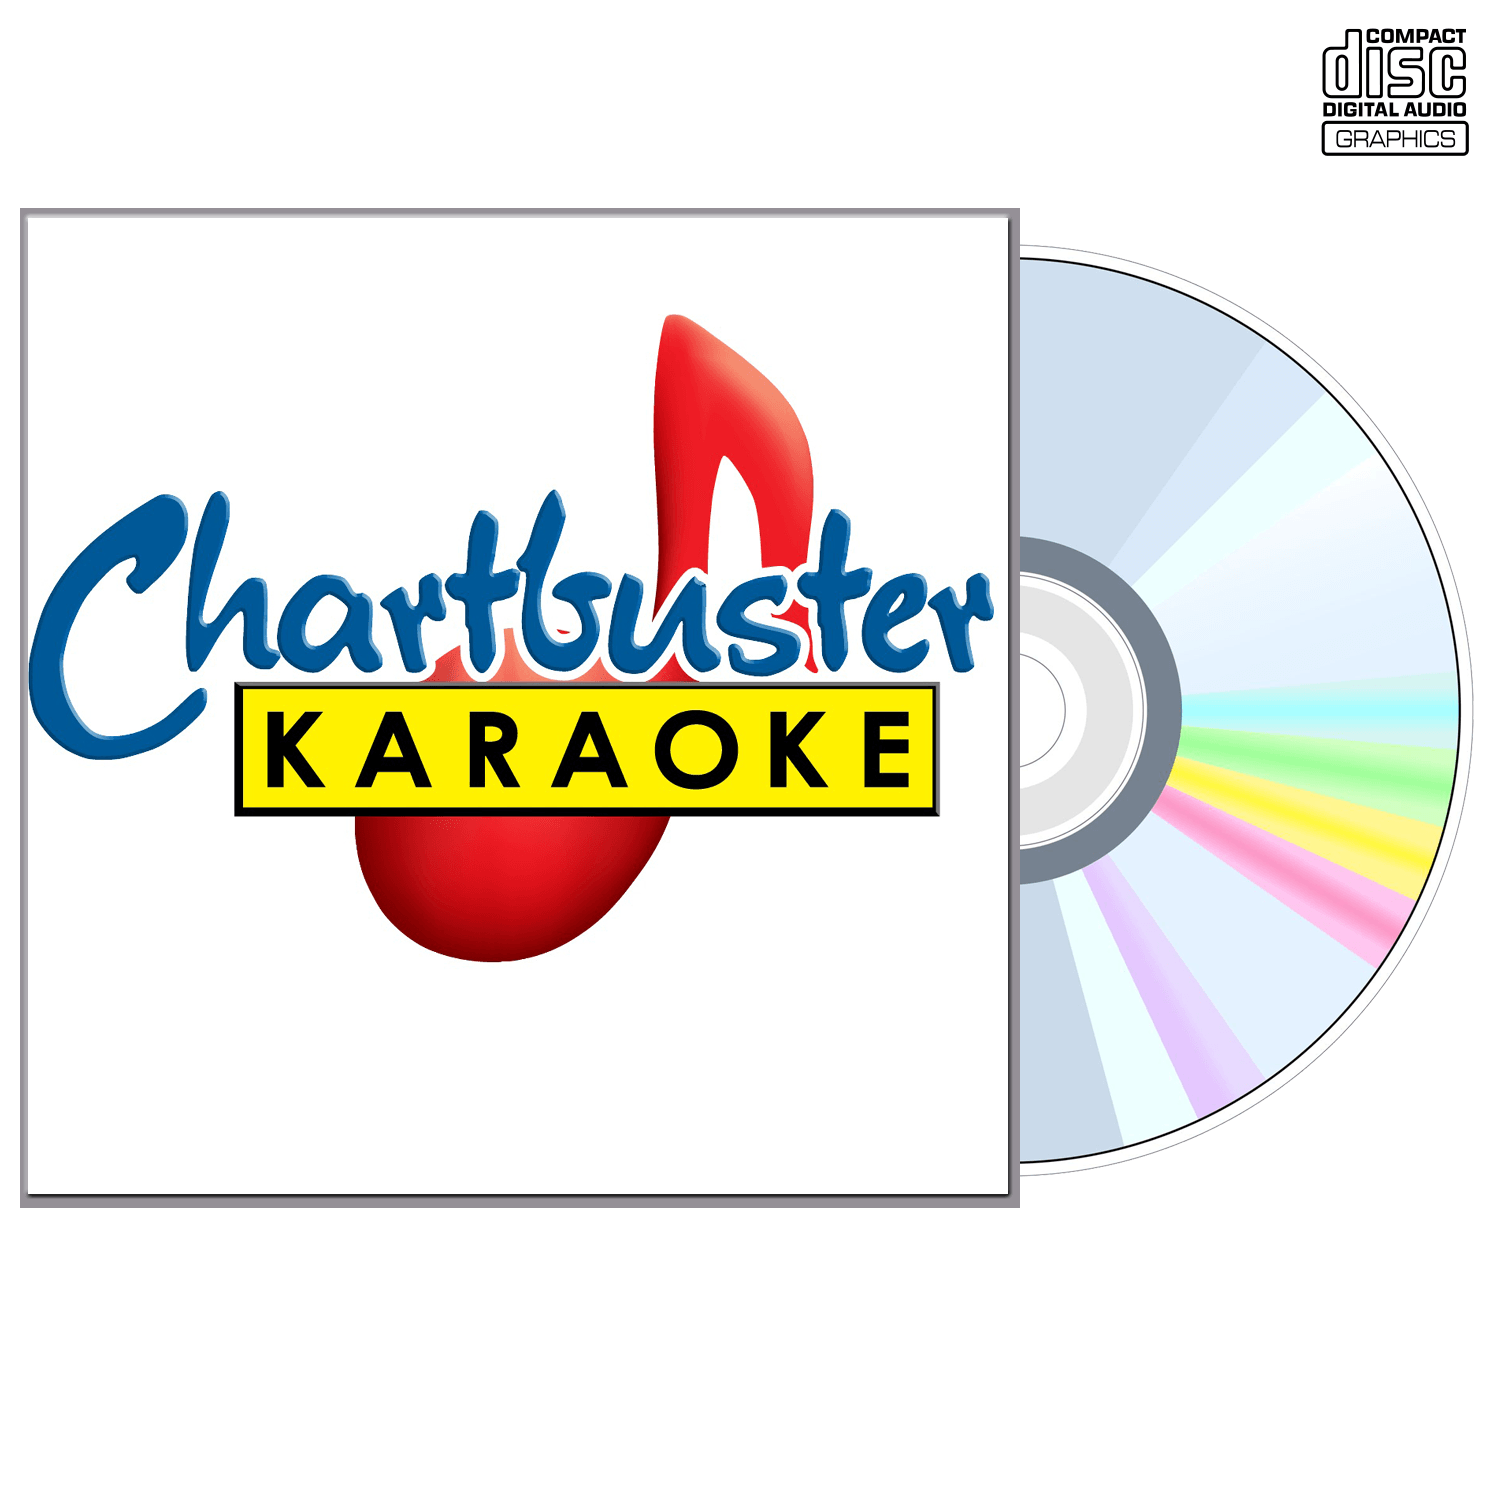 70's Collection Vol 14 - CD+G - Chartbuster Karaoke - Karaoke Home Entertainment